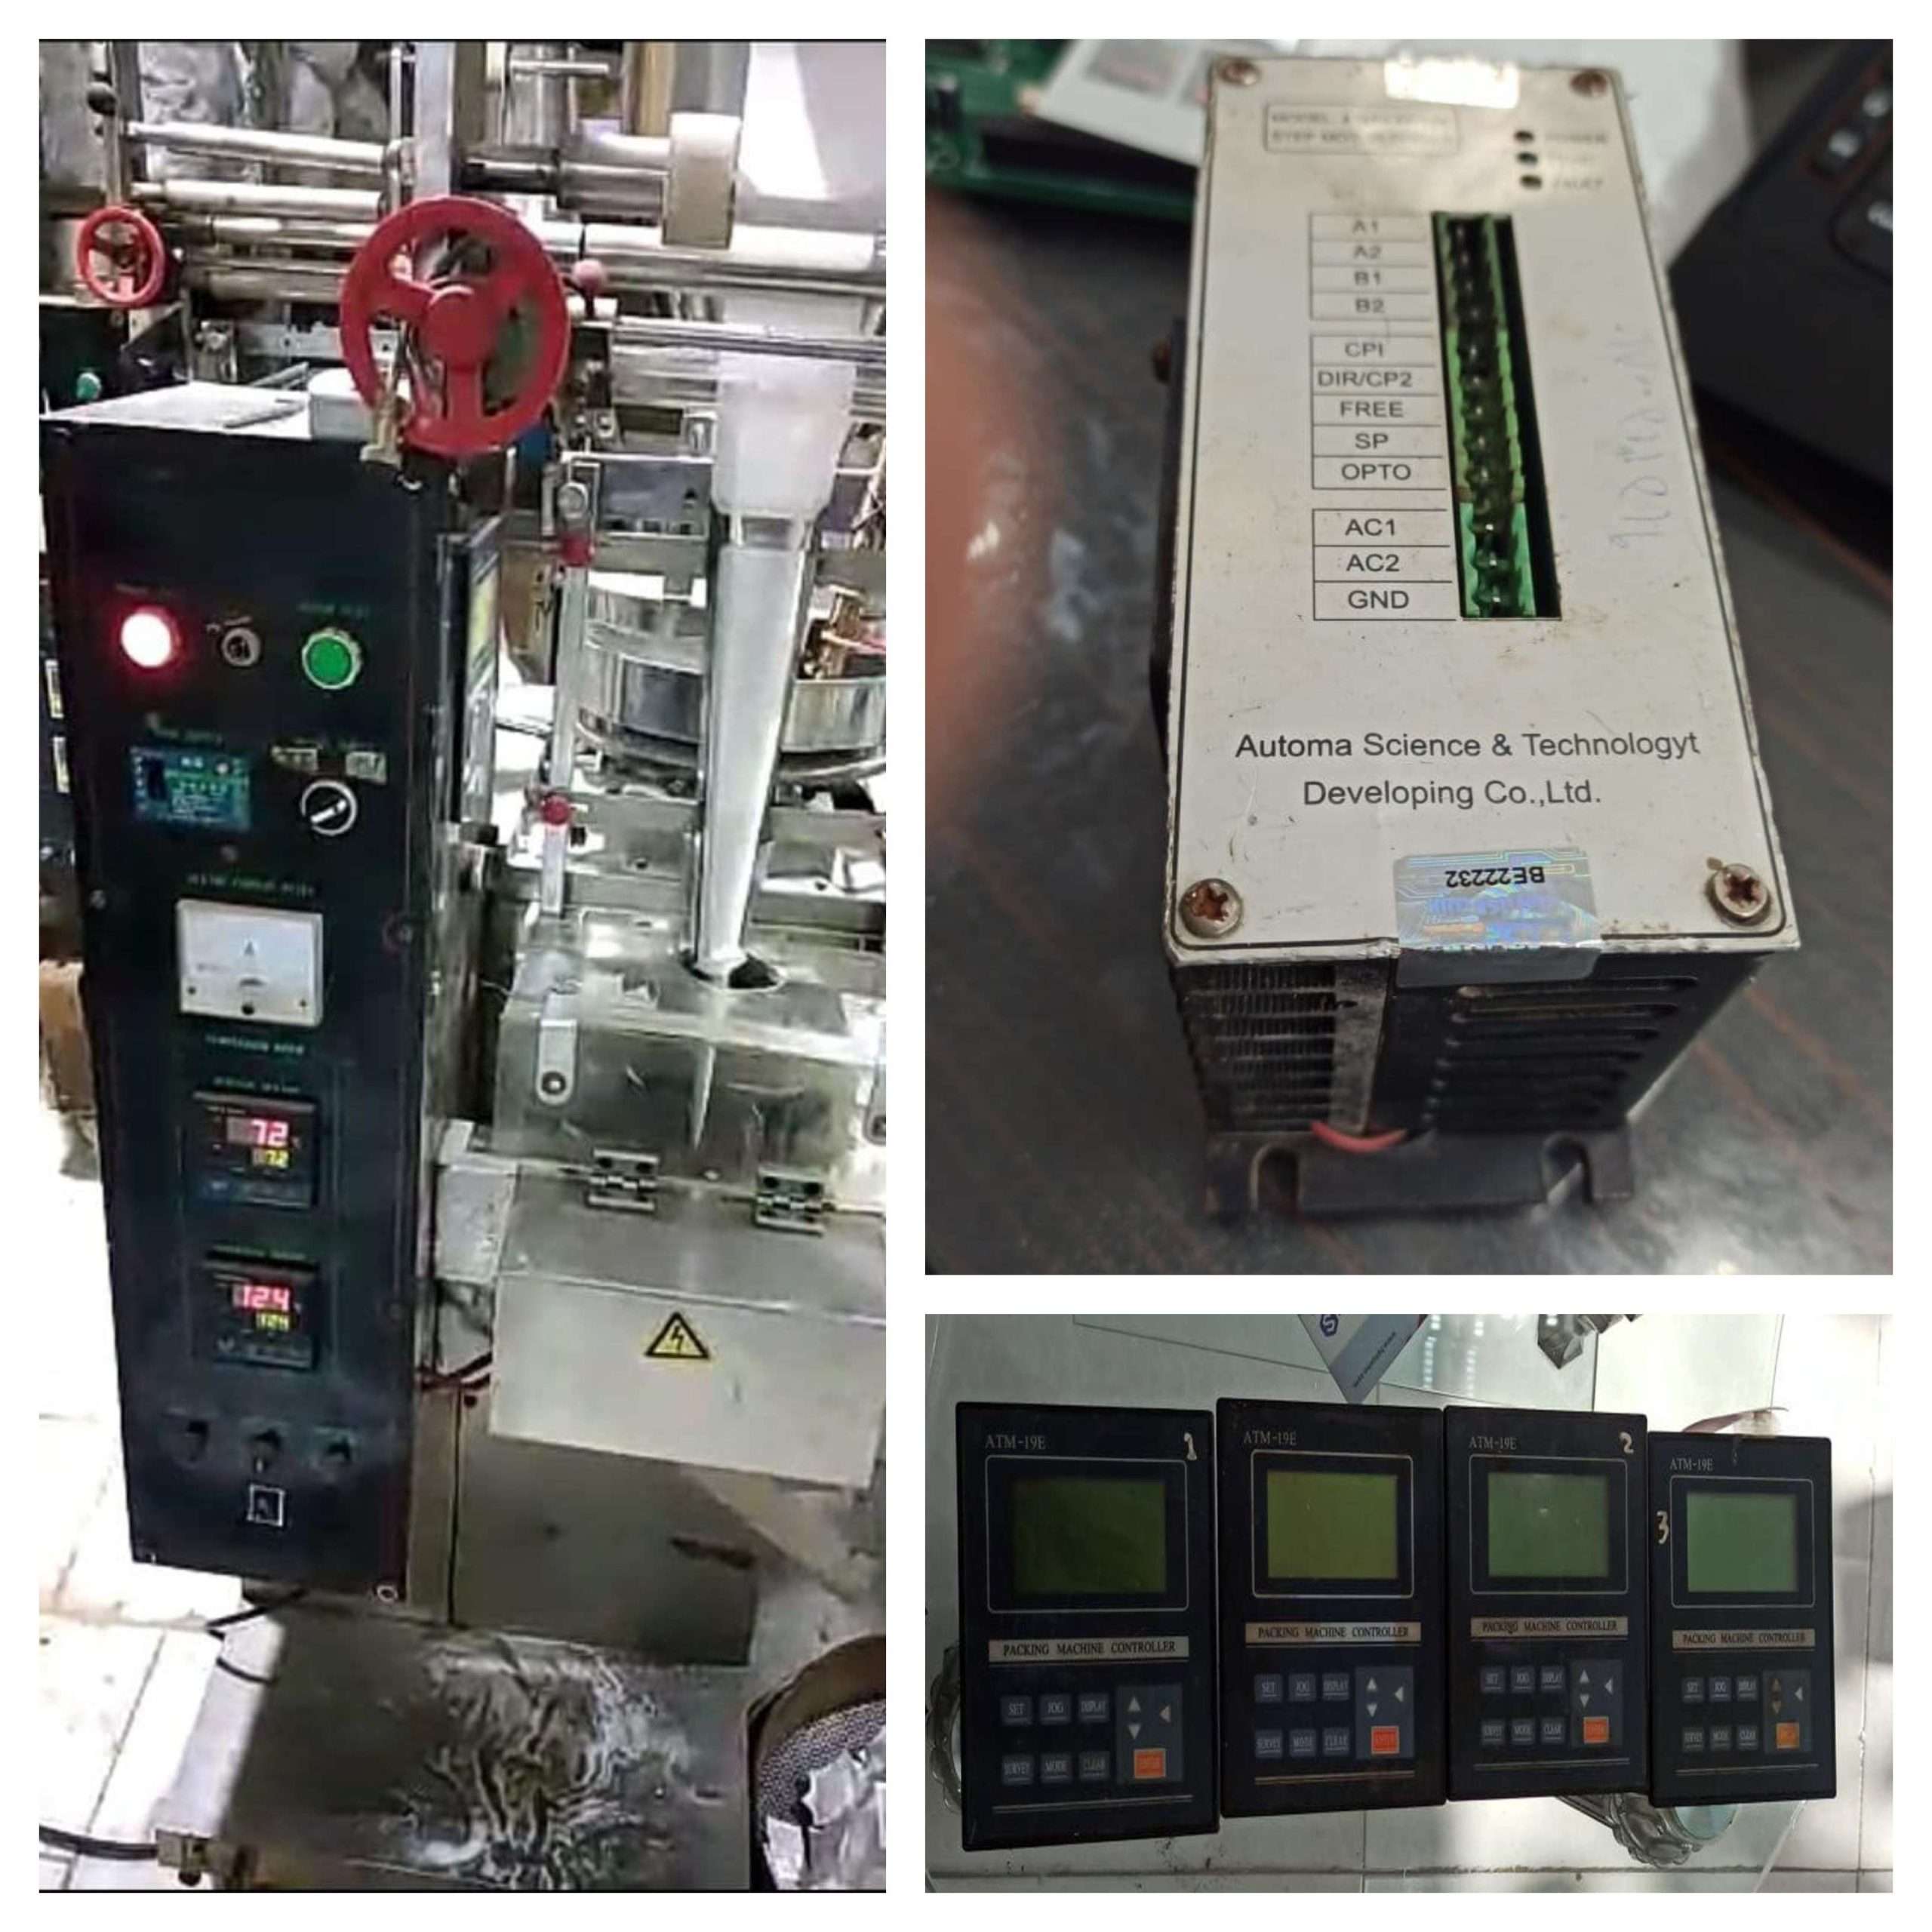 تعمیرپی ال سی کنترلر و استپ درایو دستگاه پکینگ برای ساشه Repair Of PLC Controller And Step Drive Of Packing Machine For Sachet